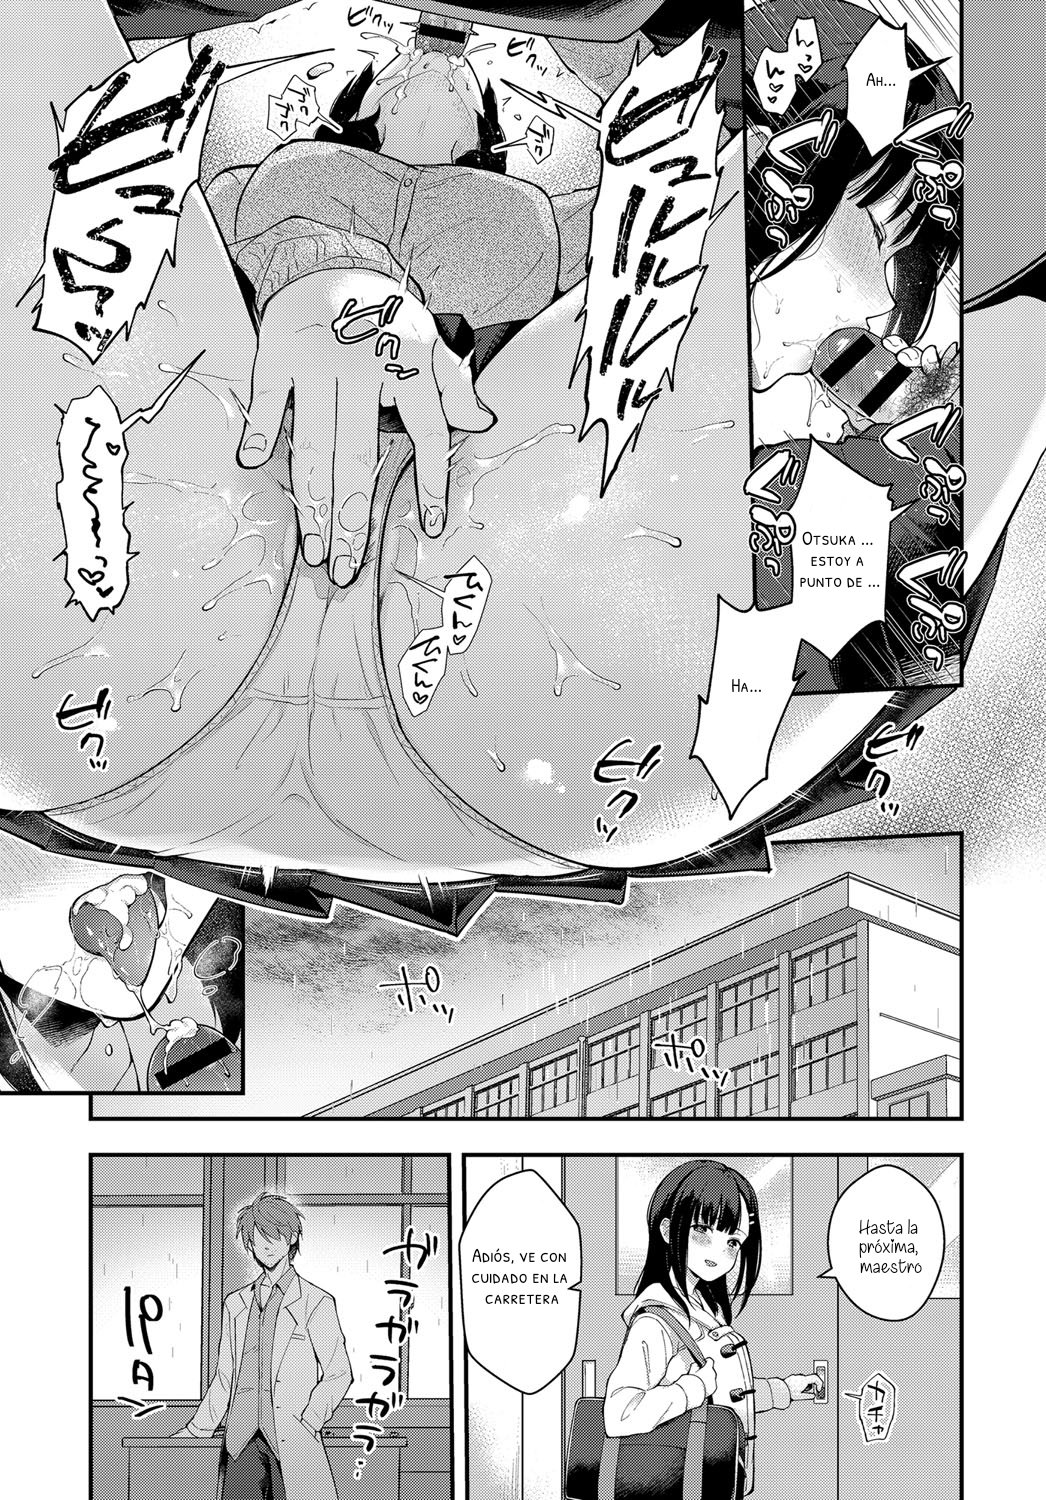 Sangatsu no Ame - Rain of March- JK Miyako no Valentine Manga cap 2 - 8